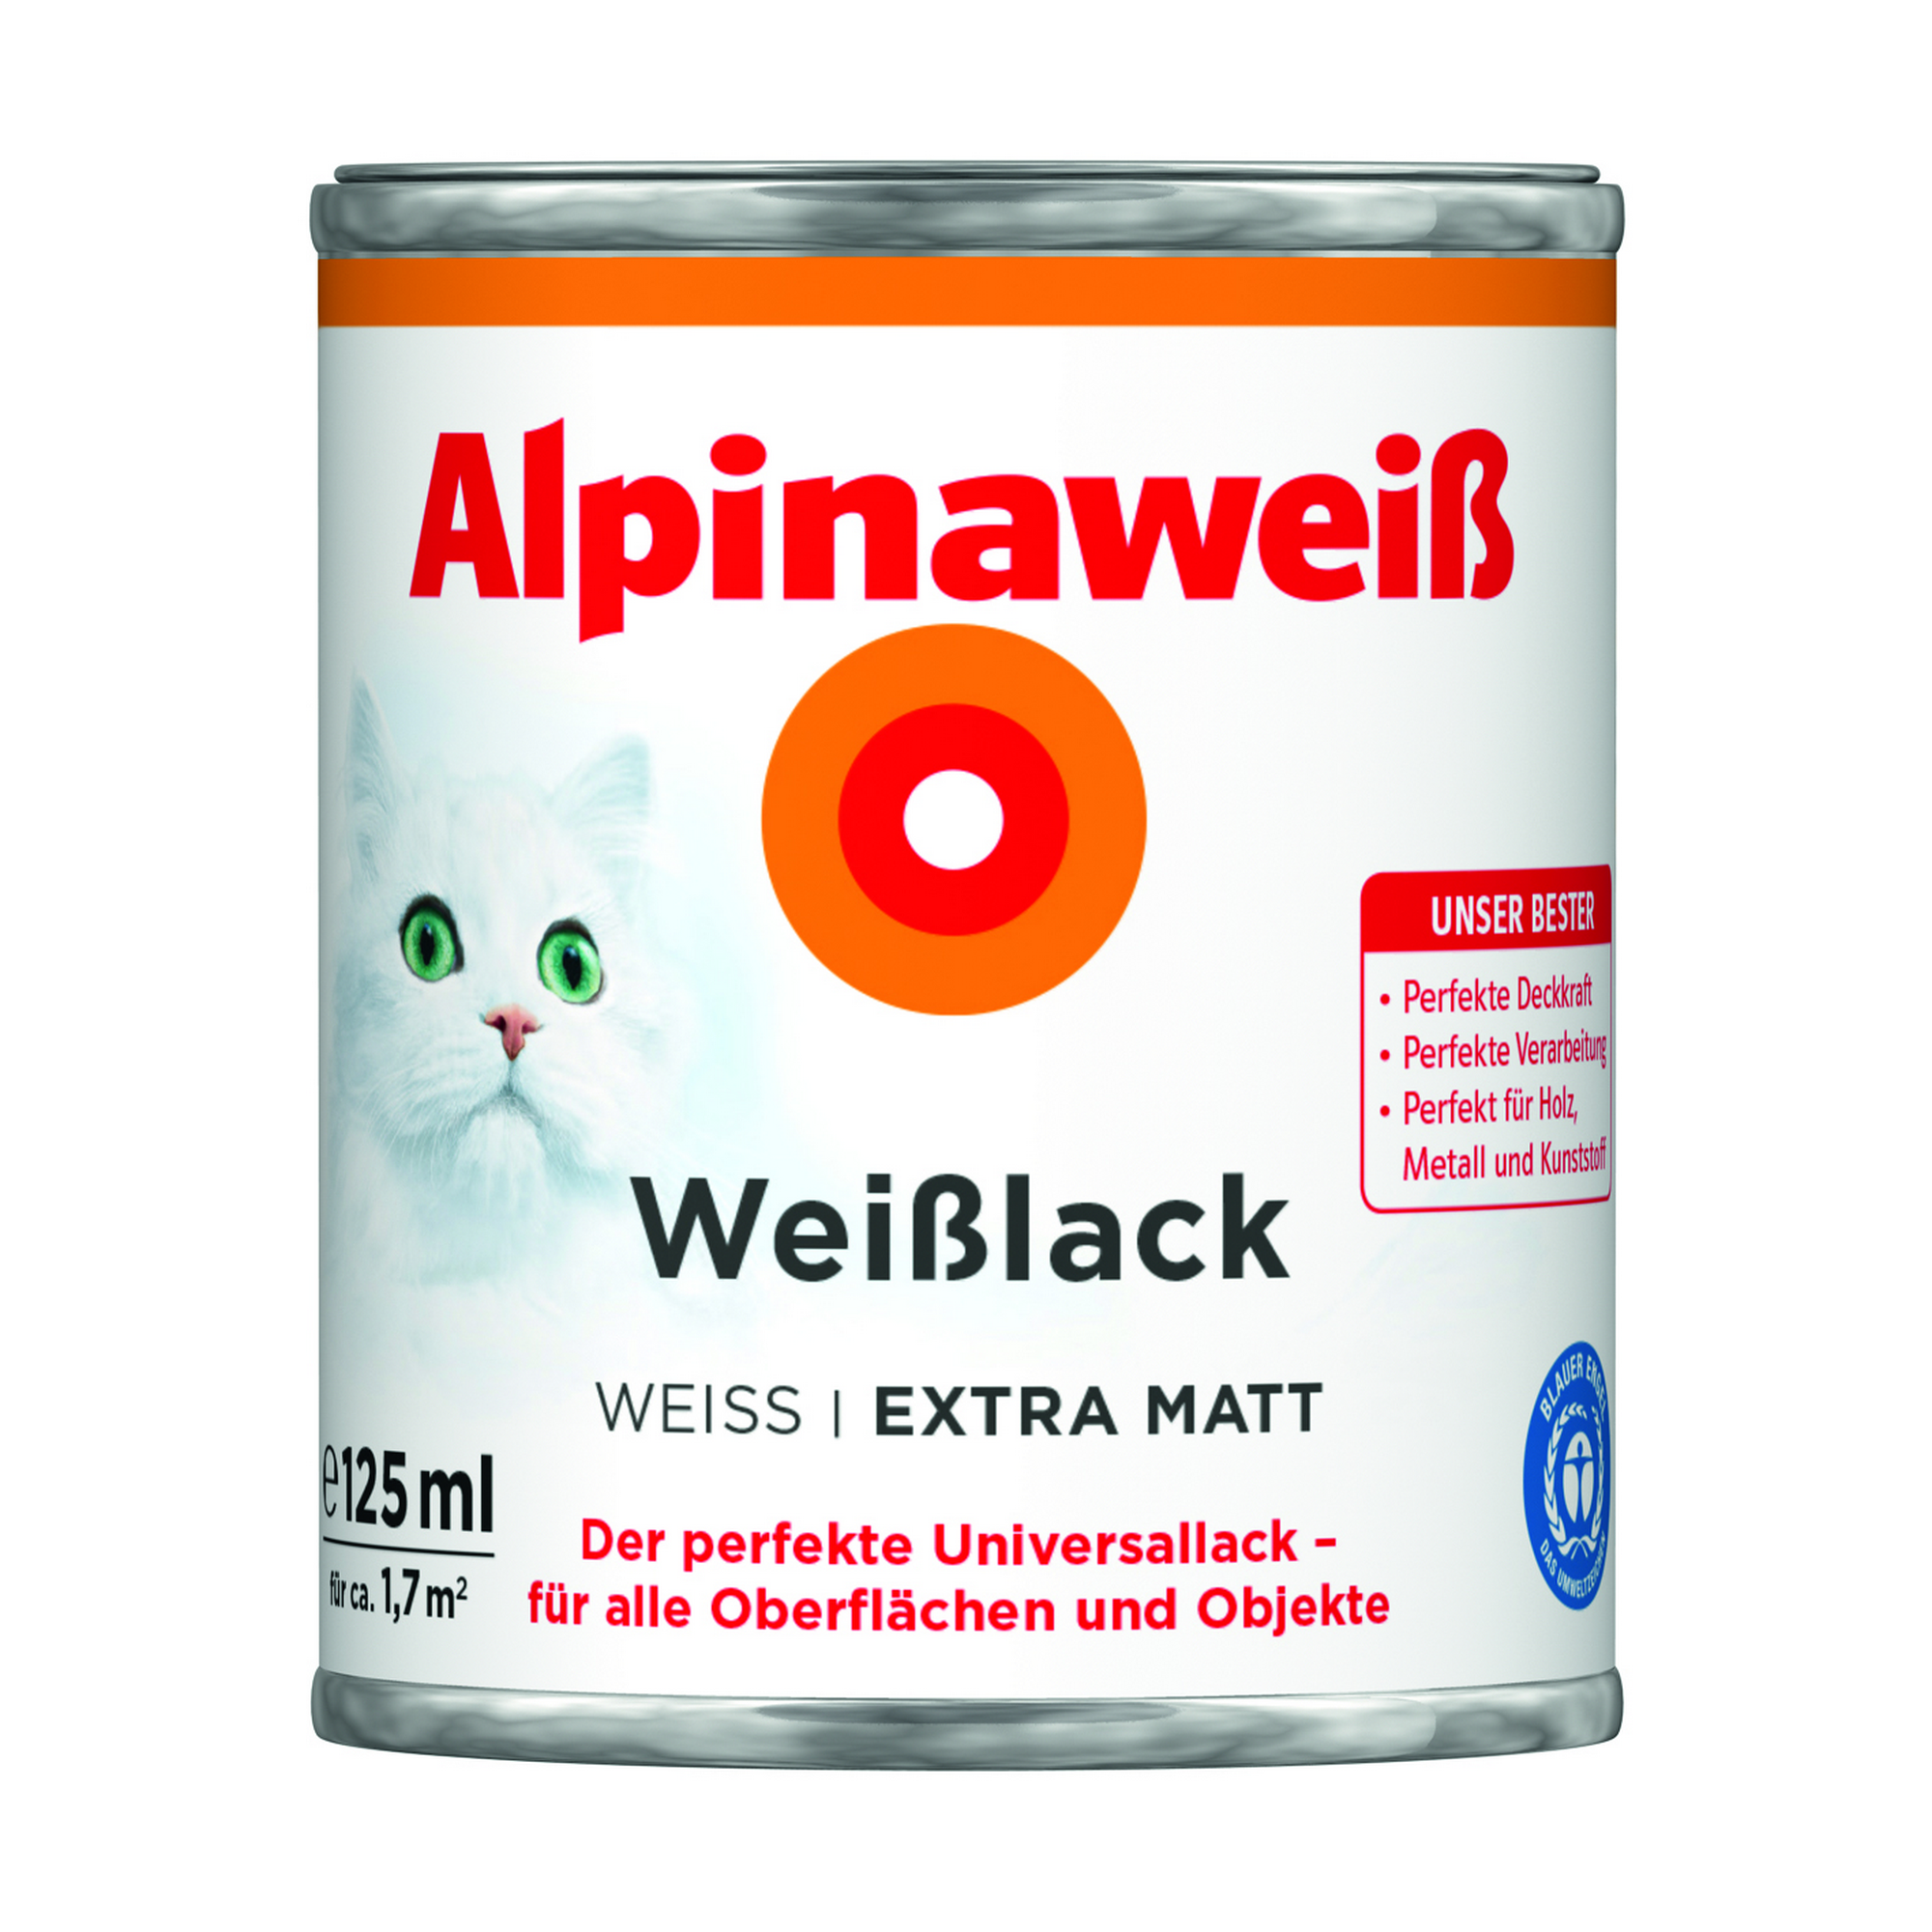 Weißlack 'Alpinaweiß' extramatt 125 ml + product picture